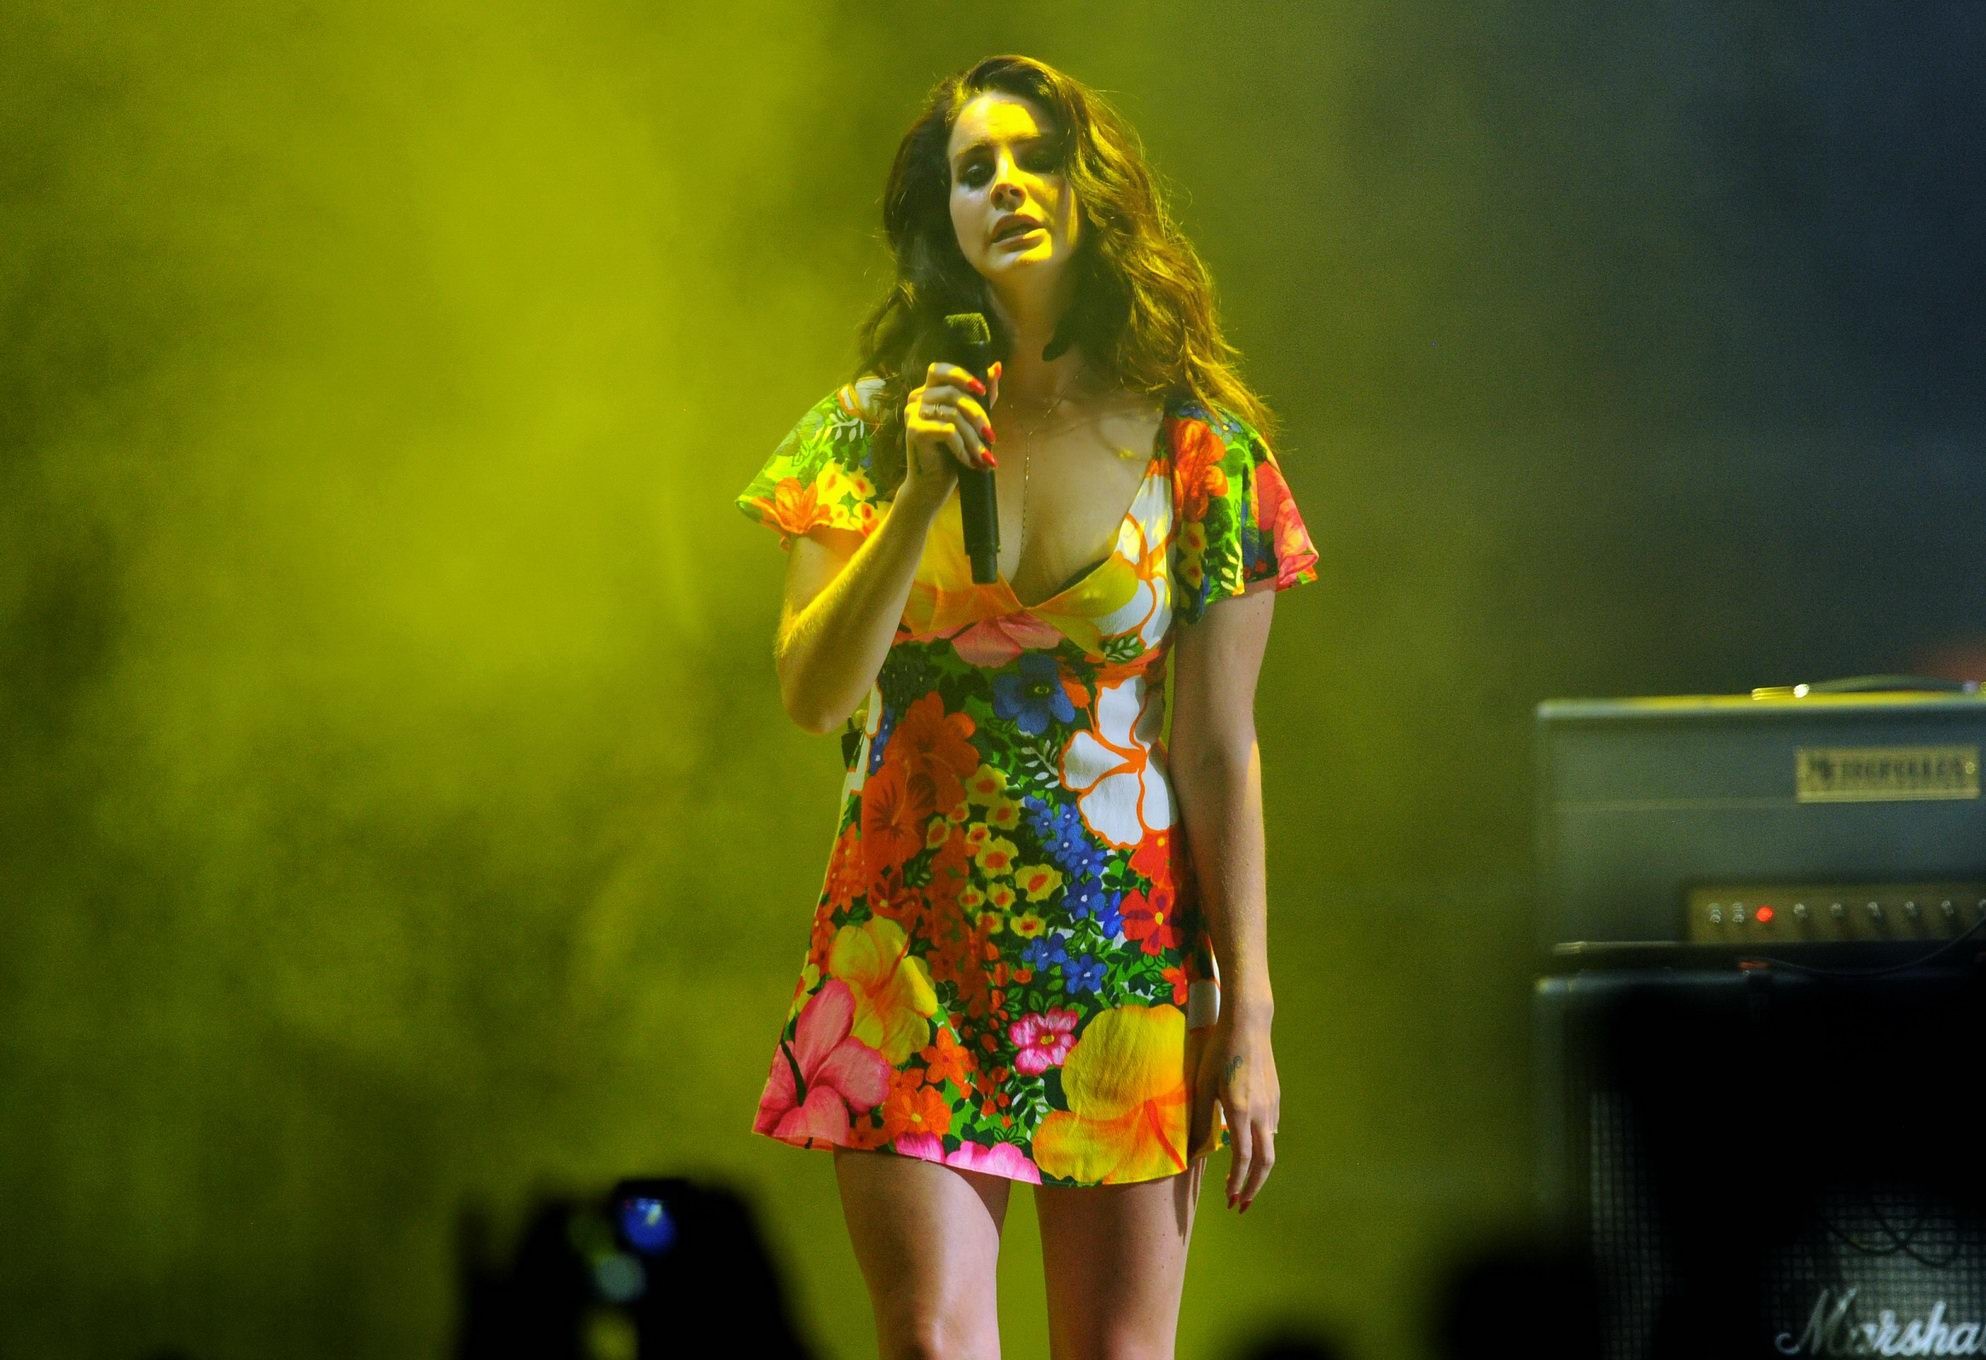 Lana Del Rey bra peek  upskirt while performing in summer mini dress at the 2014 #75196955